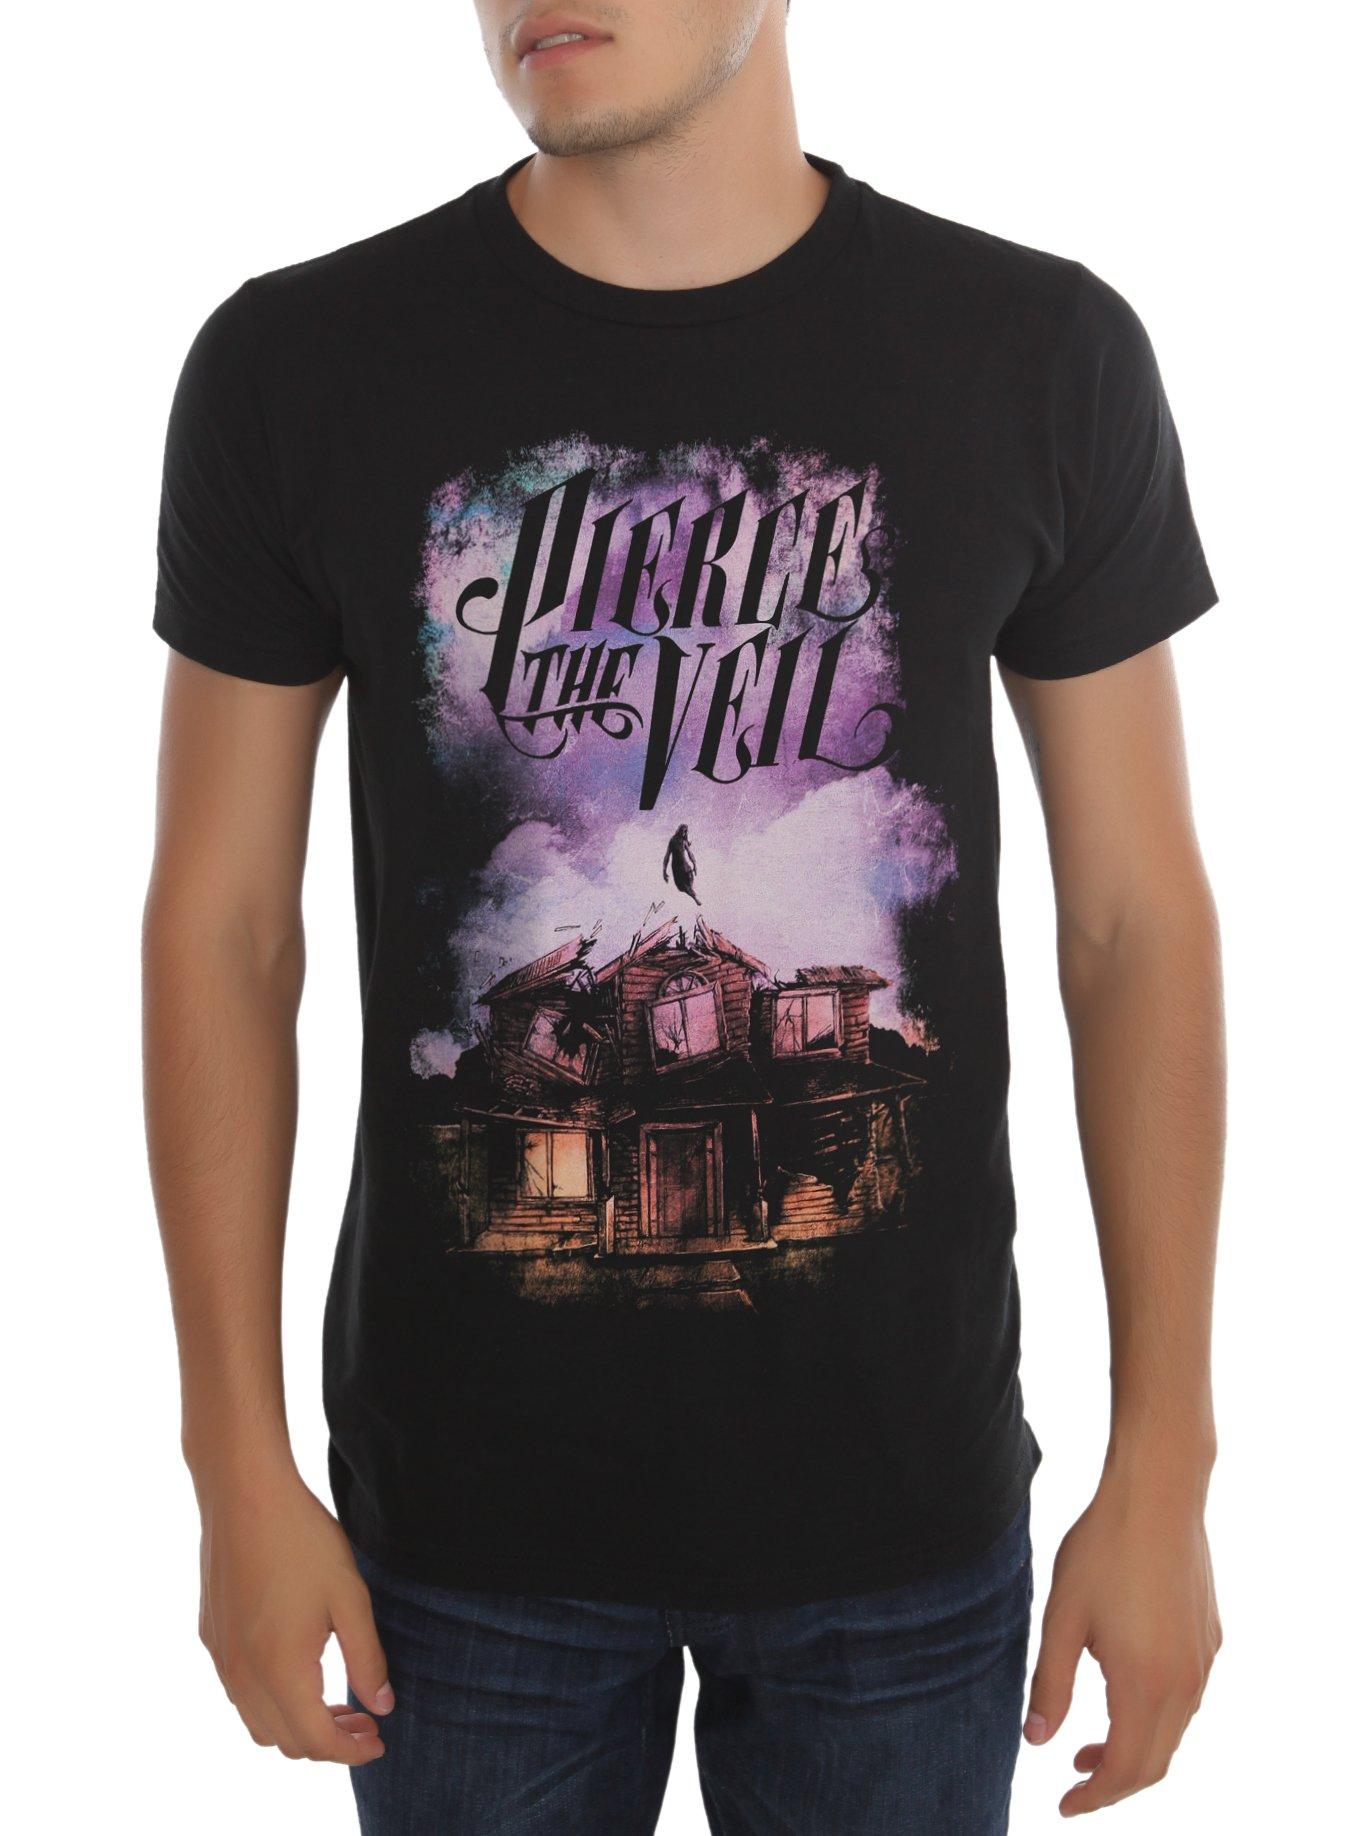 Pierce The Veil Collide With The Sky T-Shirt, BLACK, hi-res